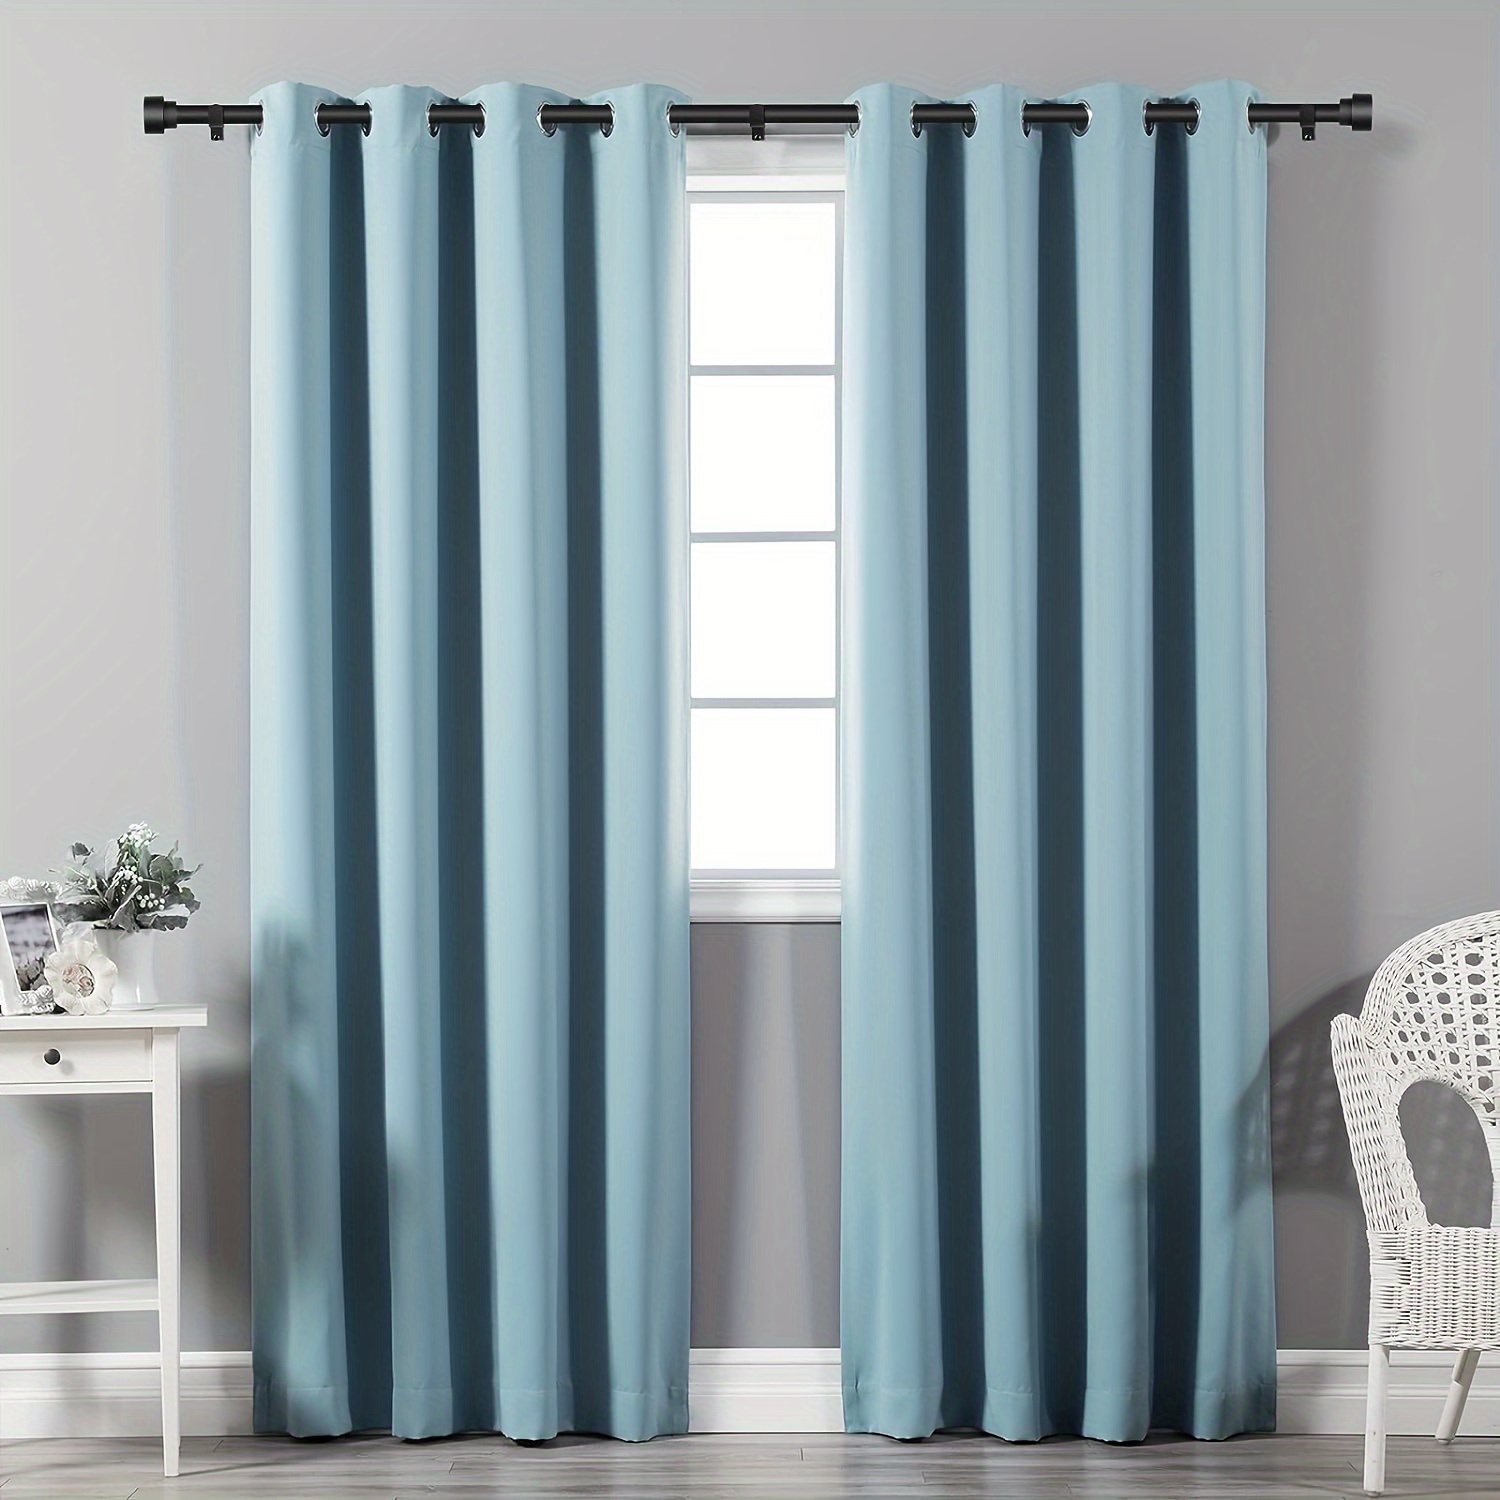 Barra de cortina blanca mate, barras de cortina pequeñas de 5/8 pulgadas  para ventanas de 23 a 66 pulgadas, juego de barras de cortina resistentes  con